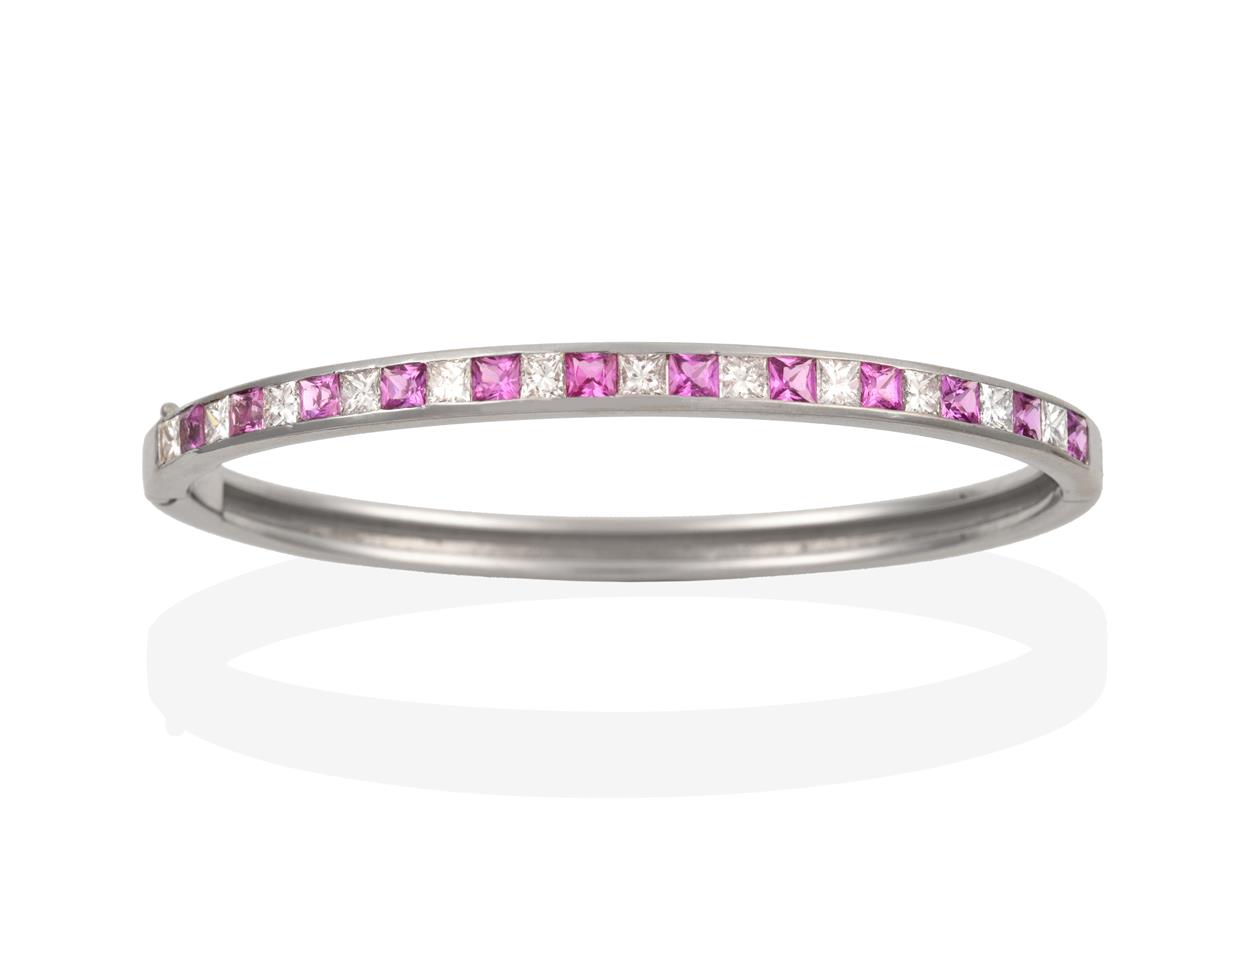 Lot 2084 - A Pink Sapphire and Diamond Bangle, princess cut diamonds alternate with square cut pink sapphires